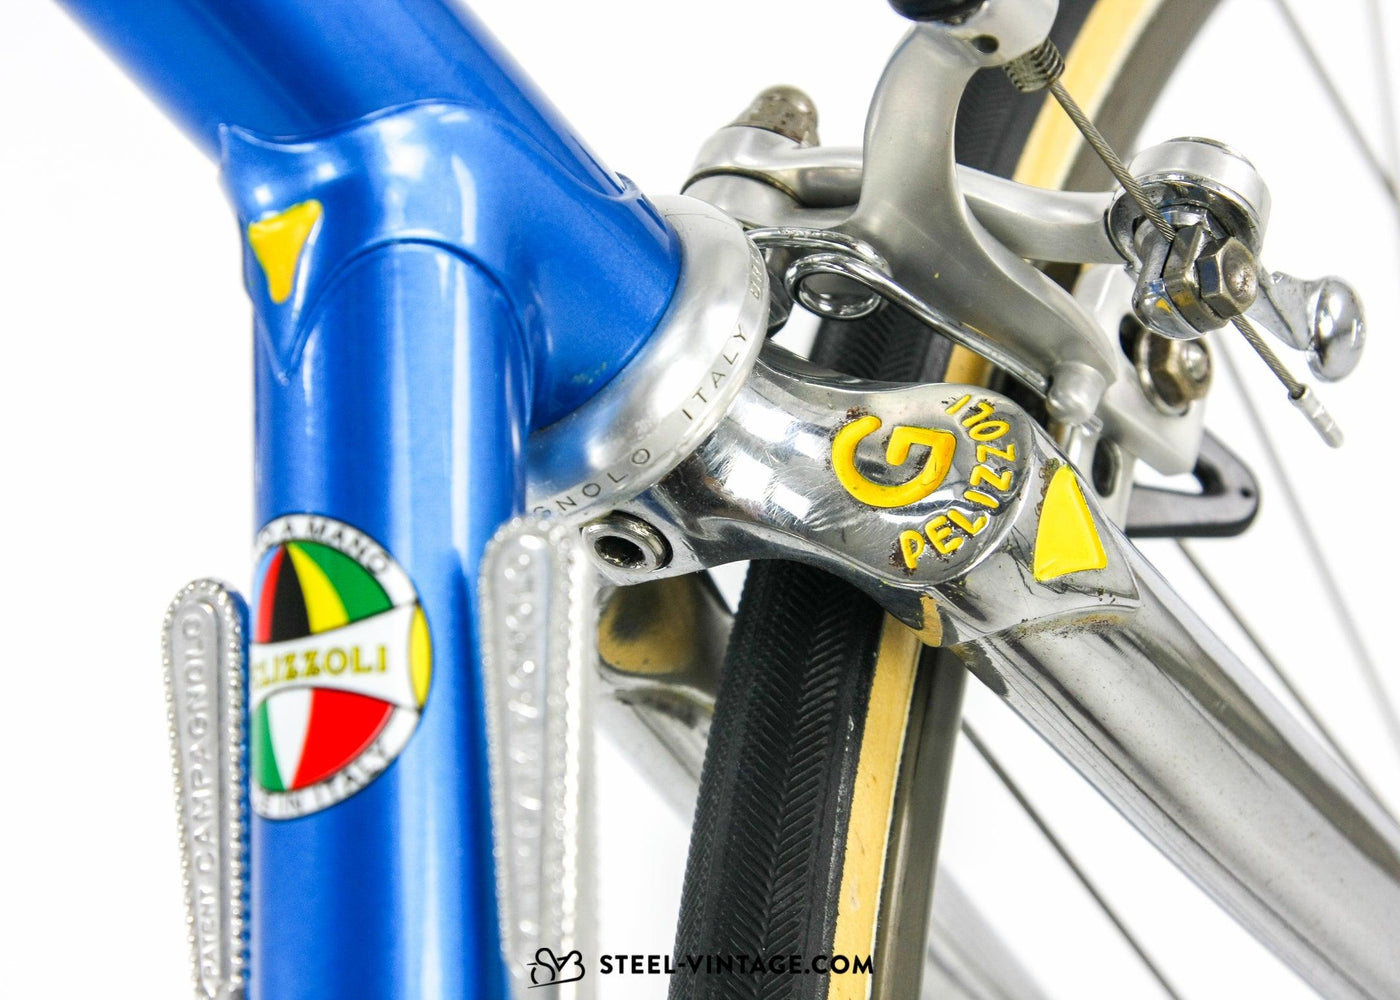 Pelizzoli Super Record Classic Racing Bicycles - Steel Vintage Bikes